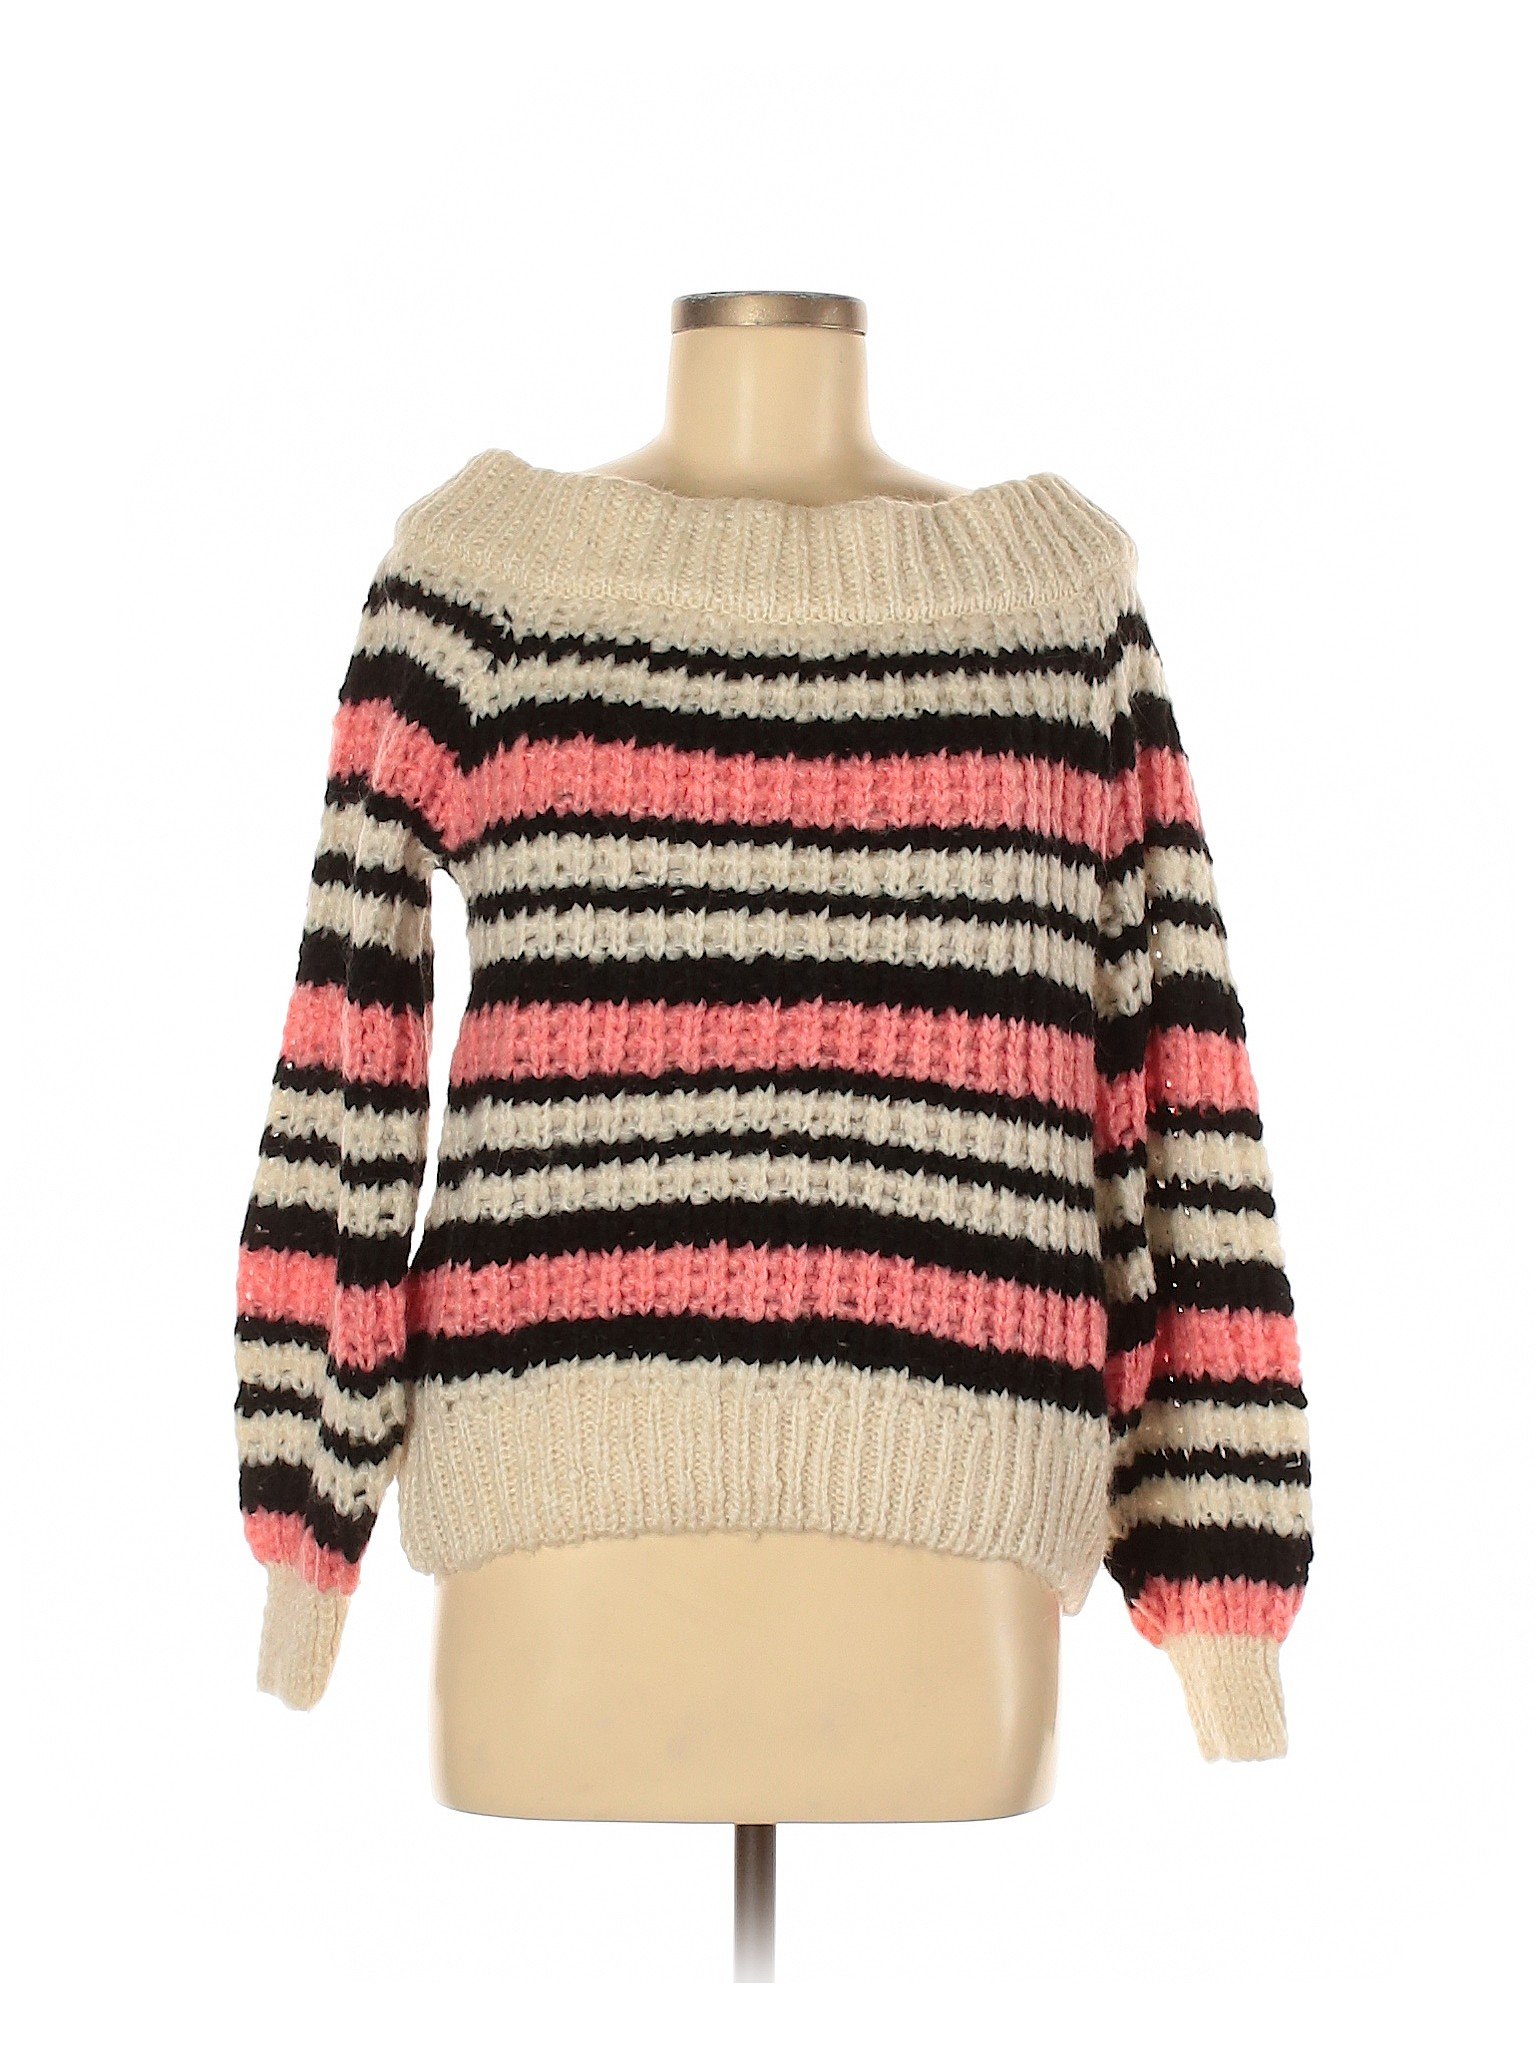 River Island Women Brown Wool Pullover Sweater 6 | eBay